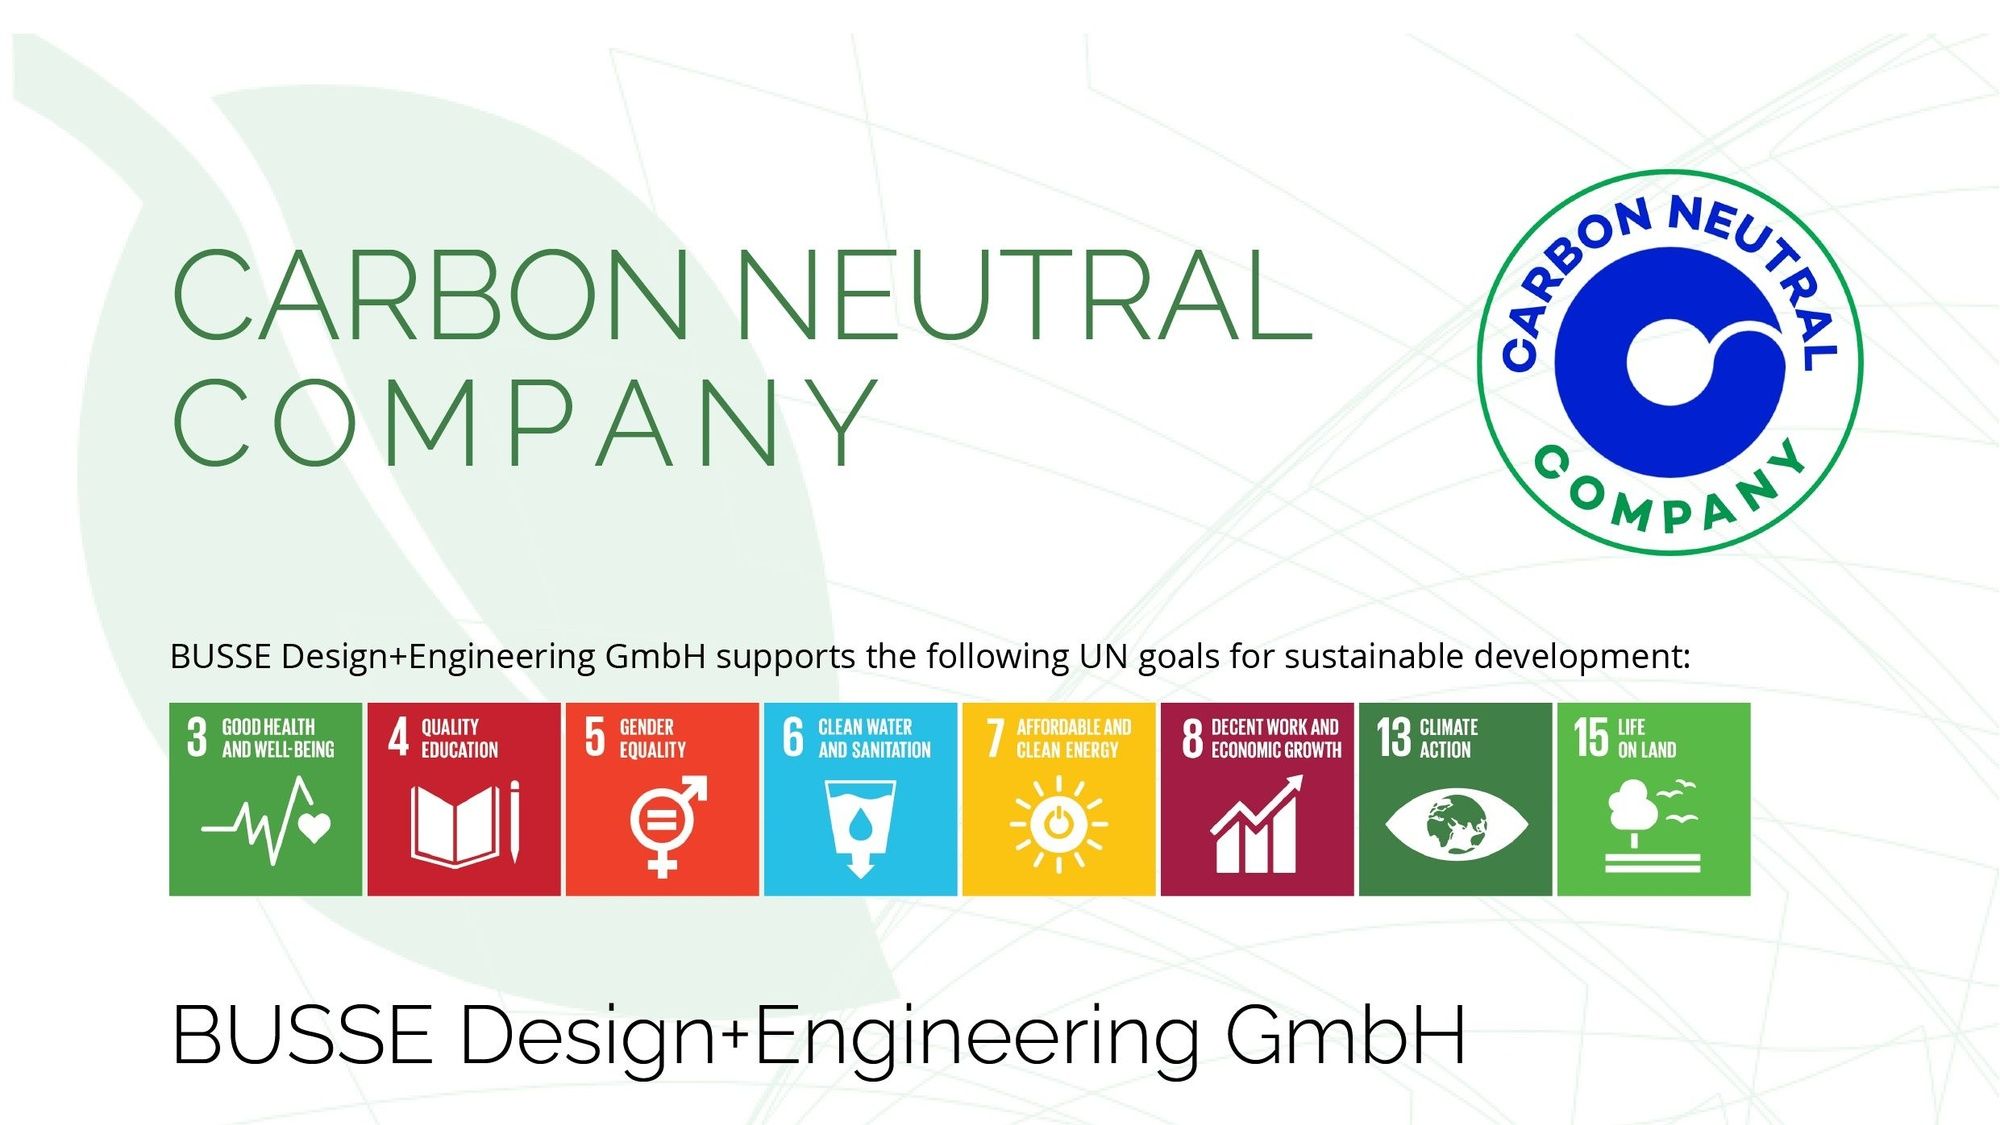 Carbon neutral company